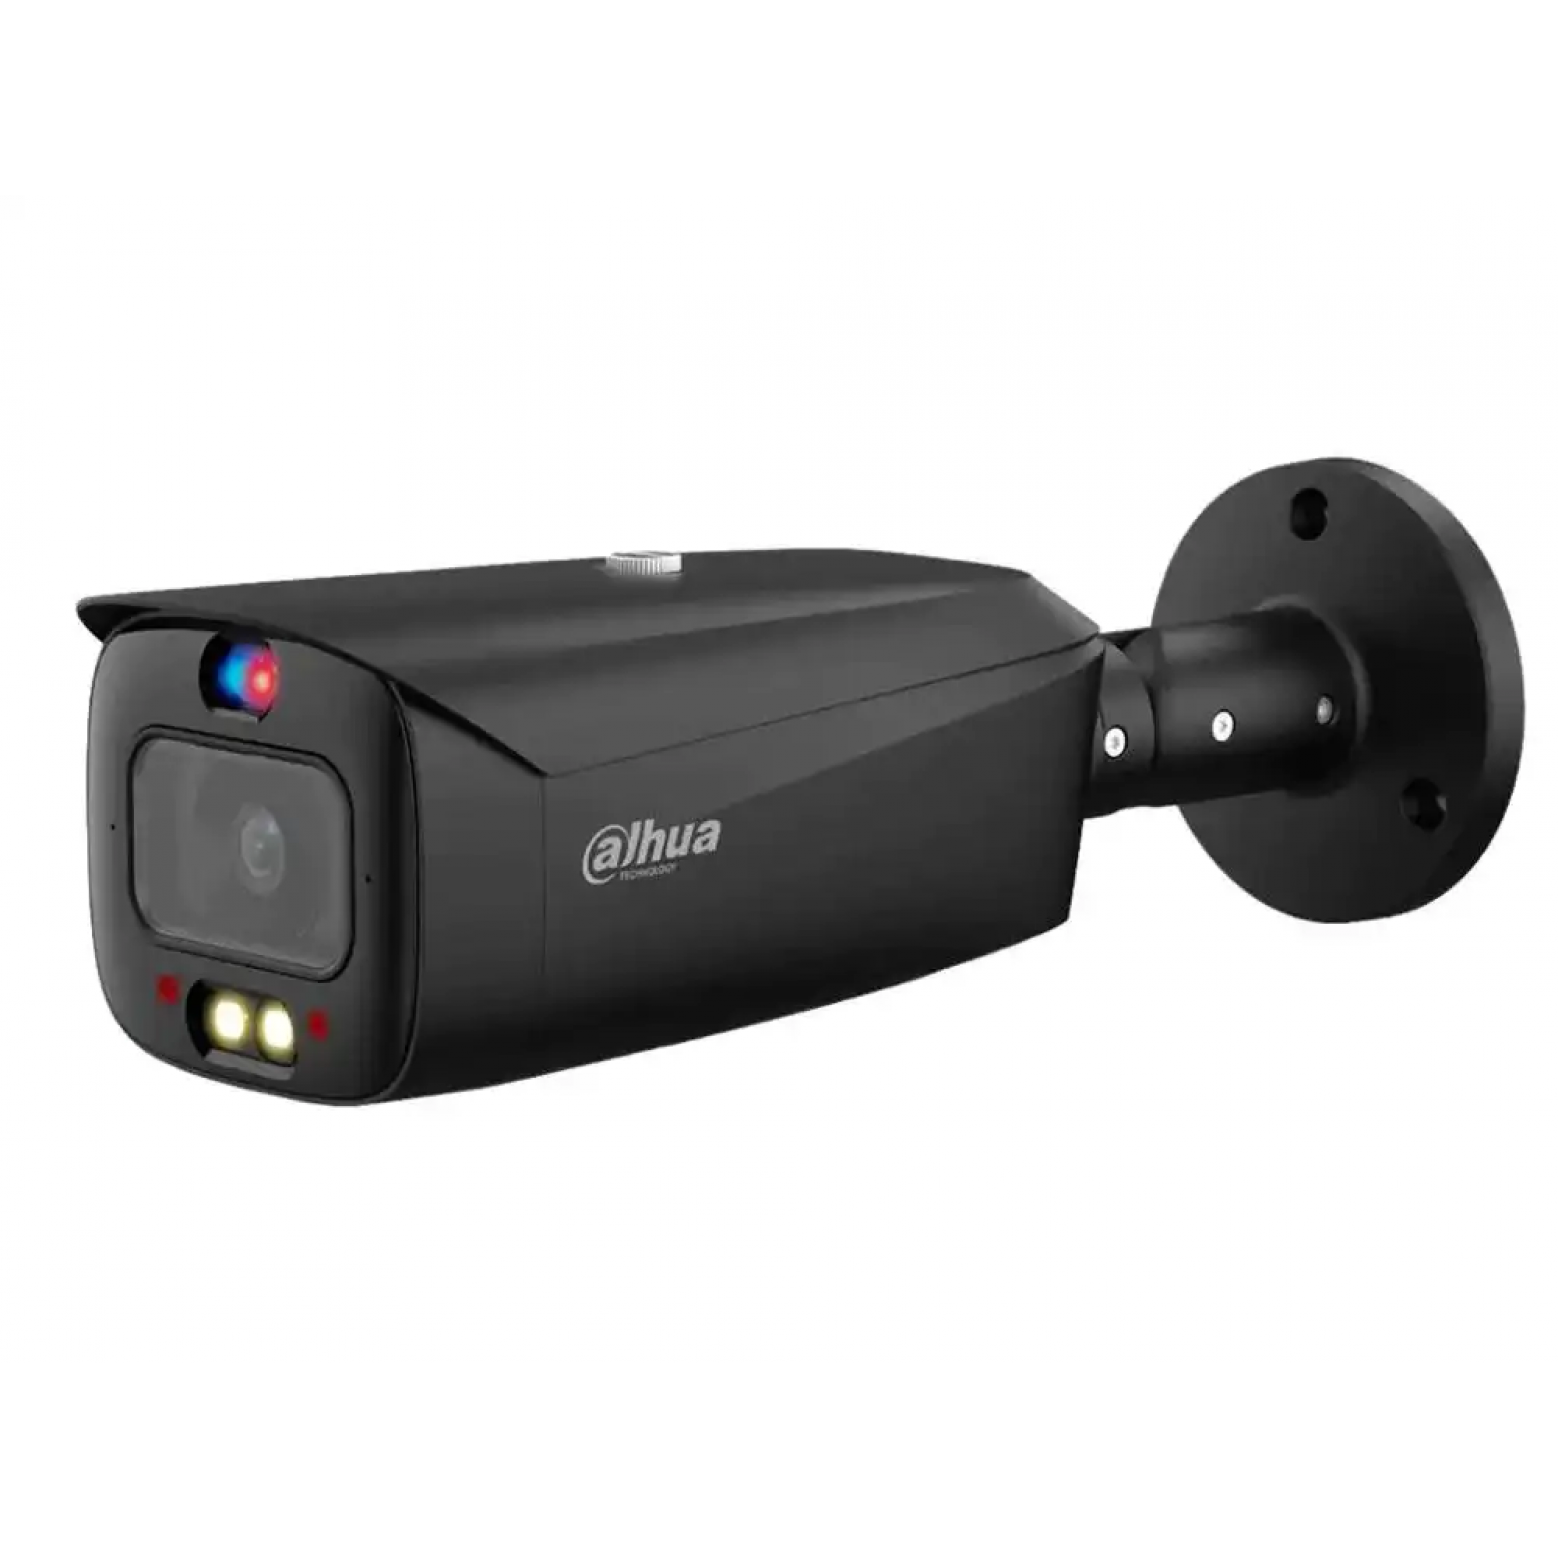 Dahua IPC-HFW3849T1-AS-PV-S4-B - Wiszense - Full Color - Tioc - IP - Telecamera bullet - 8MP - Varifocale 2,7-13,5mm - PoE - Nero